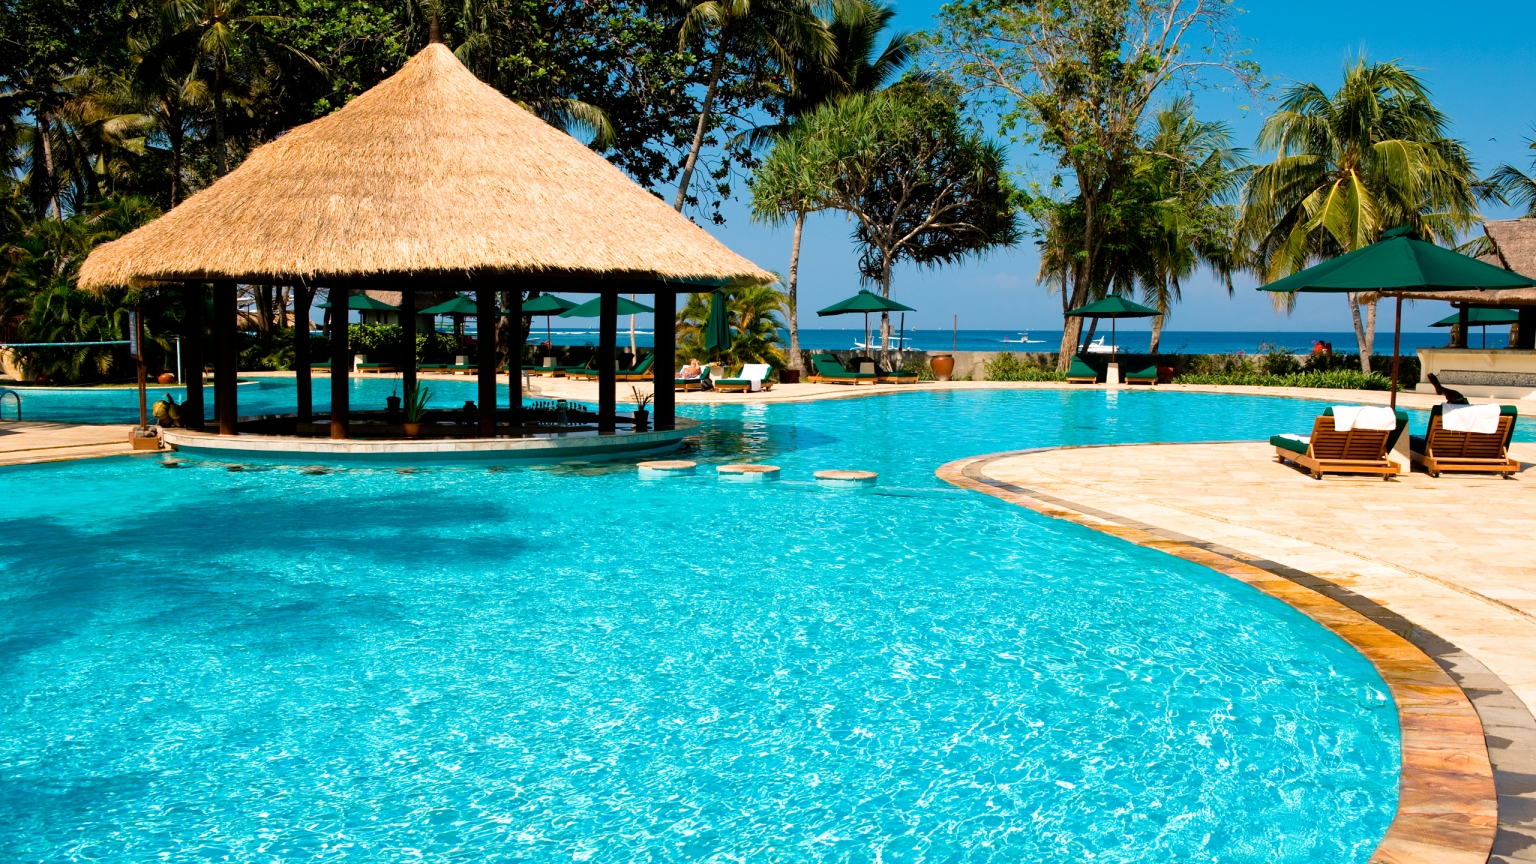 Luxury Resorts Costa Rica for 1536 x 864 HDTV resolution